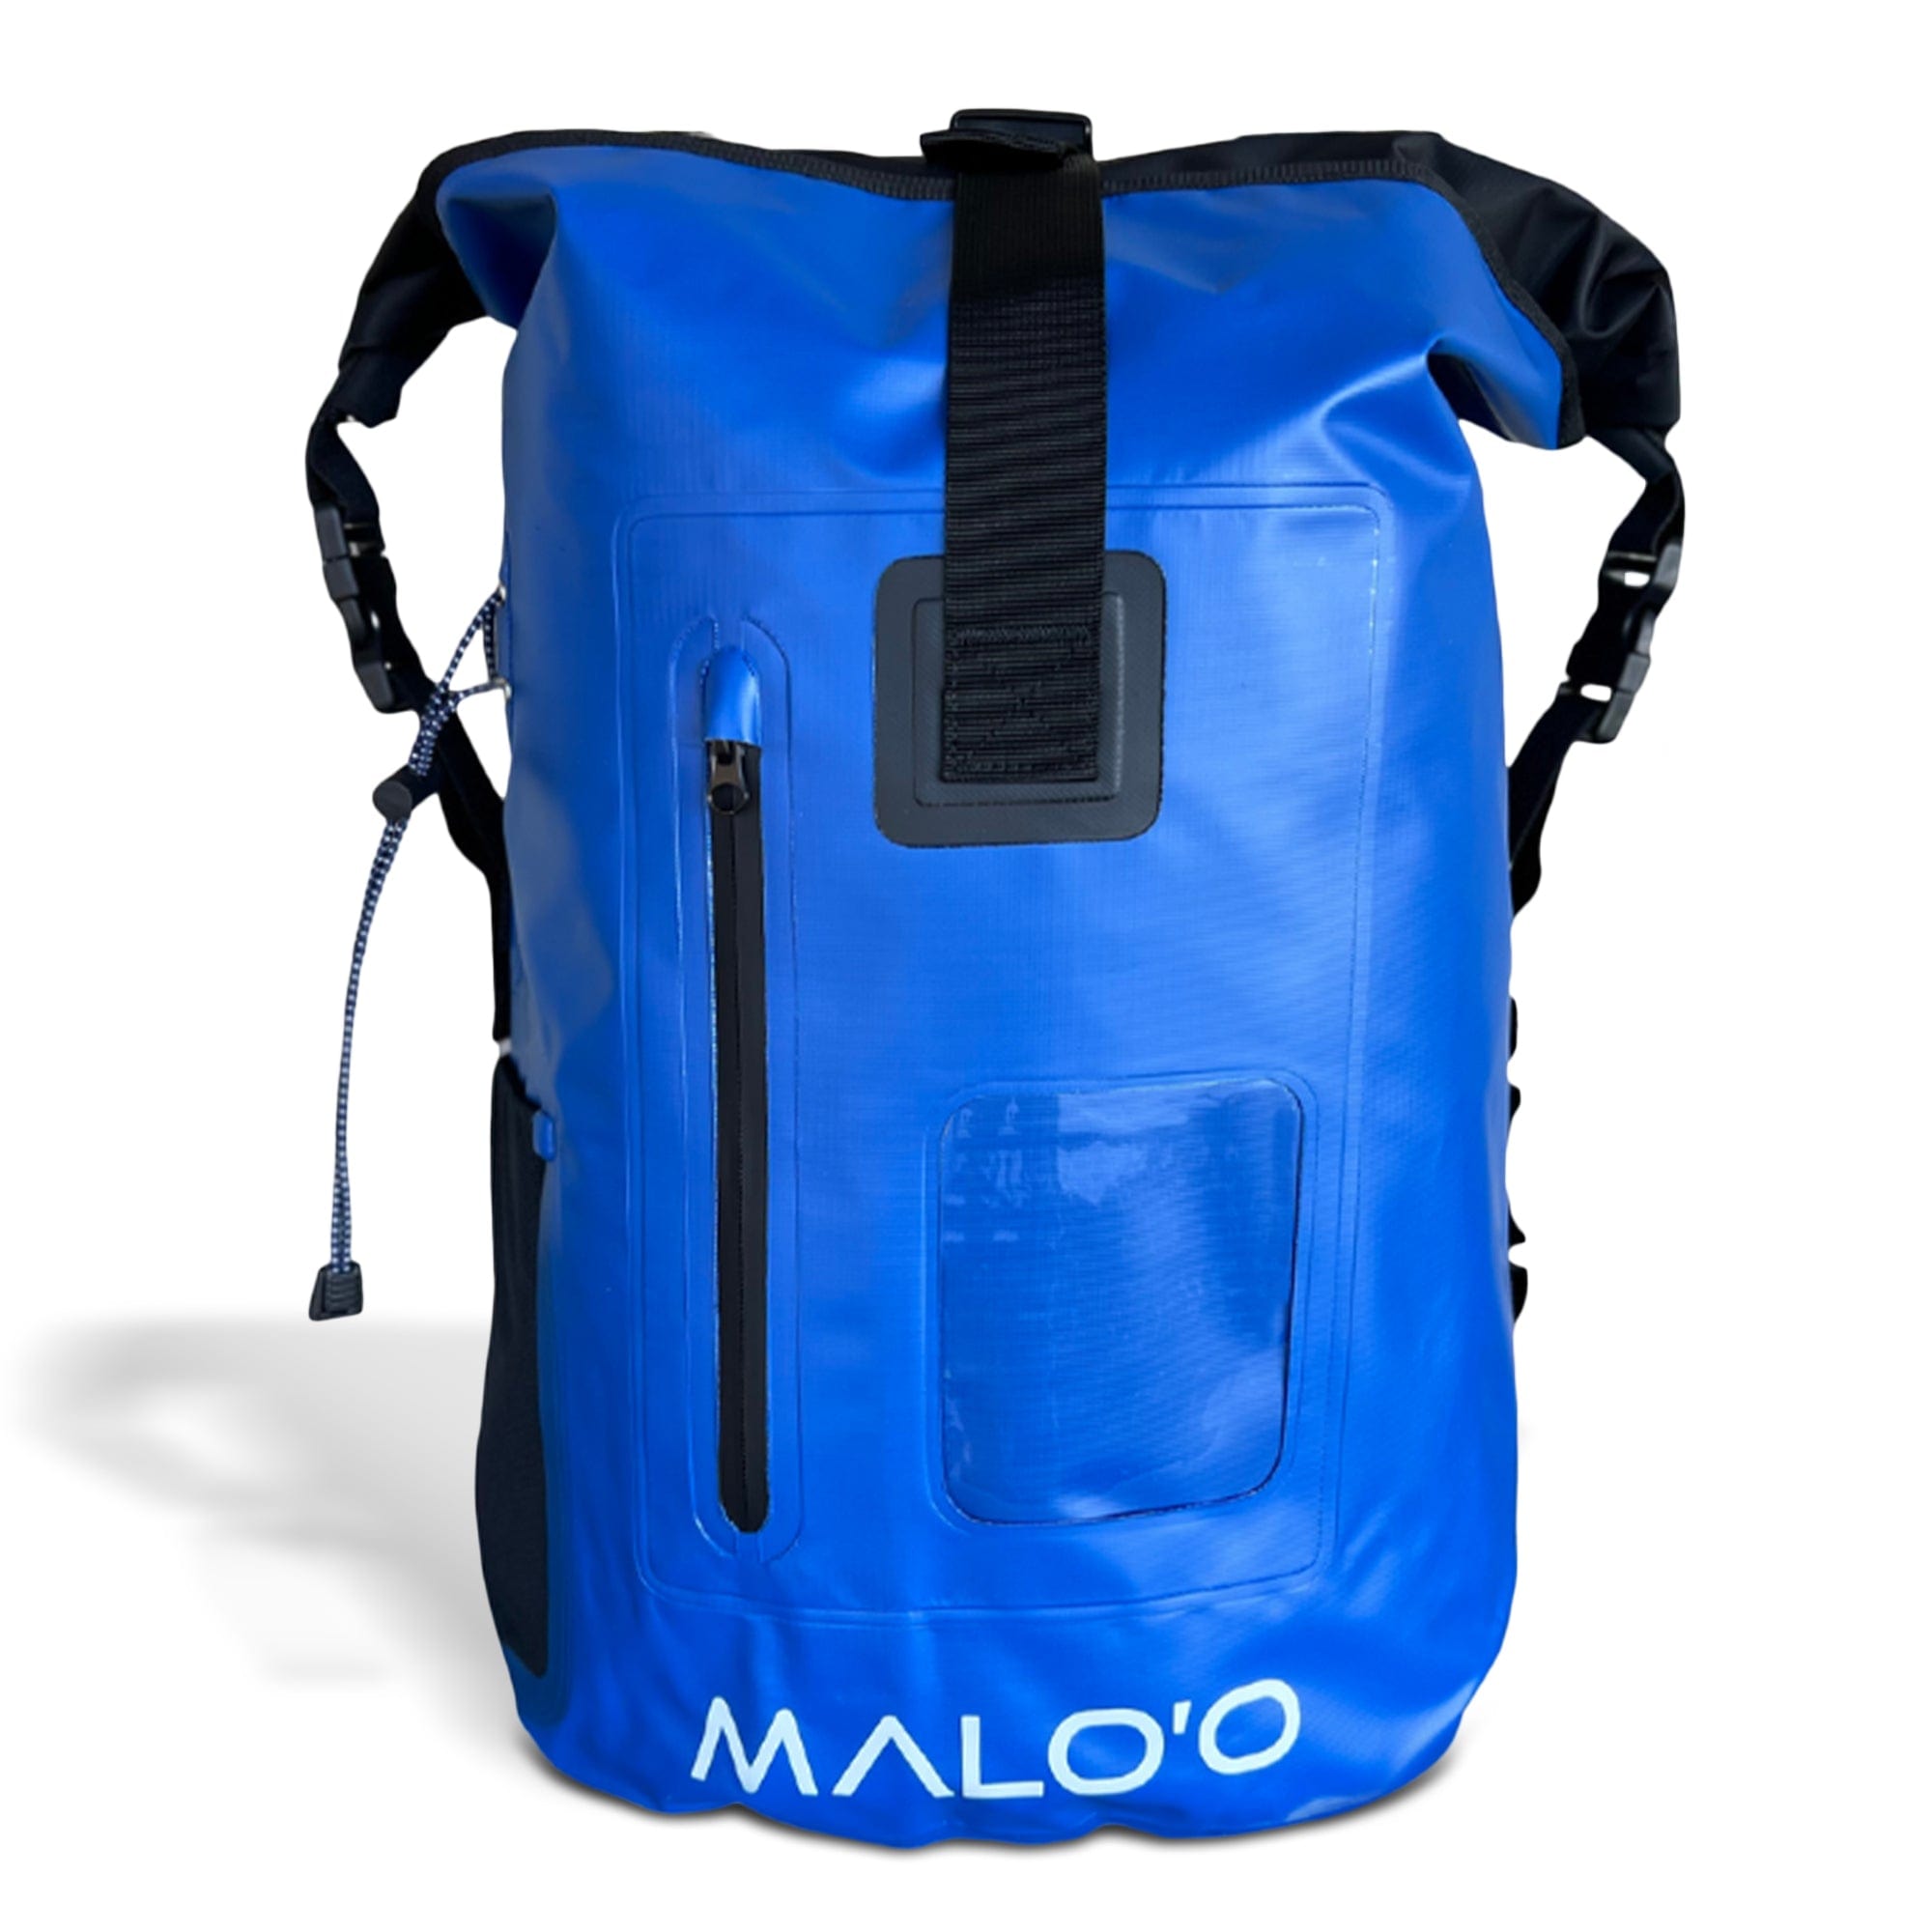 Malo'o Drypack Roll Top Waterproof Bag Blue / Large - 40 Liter